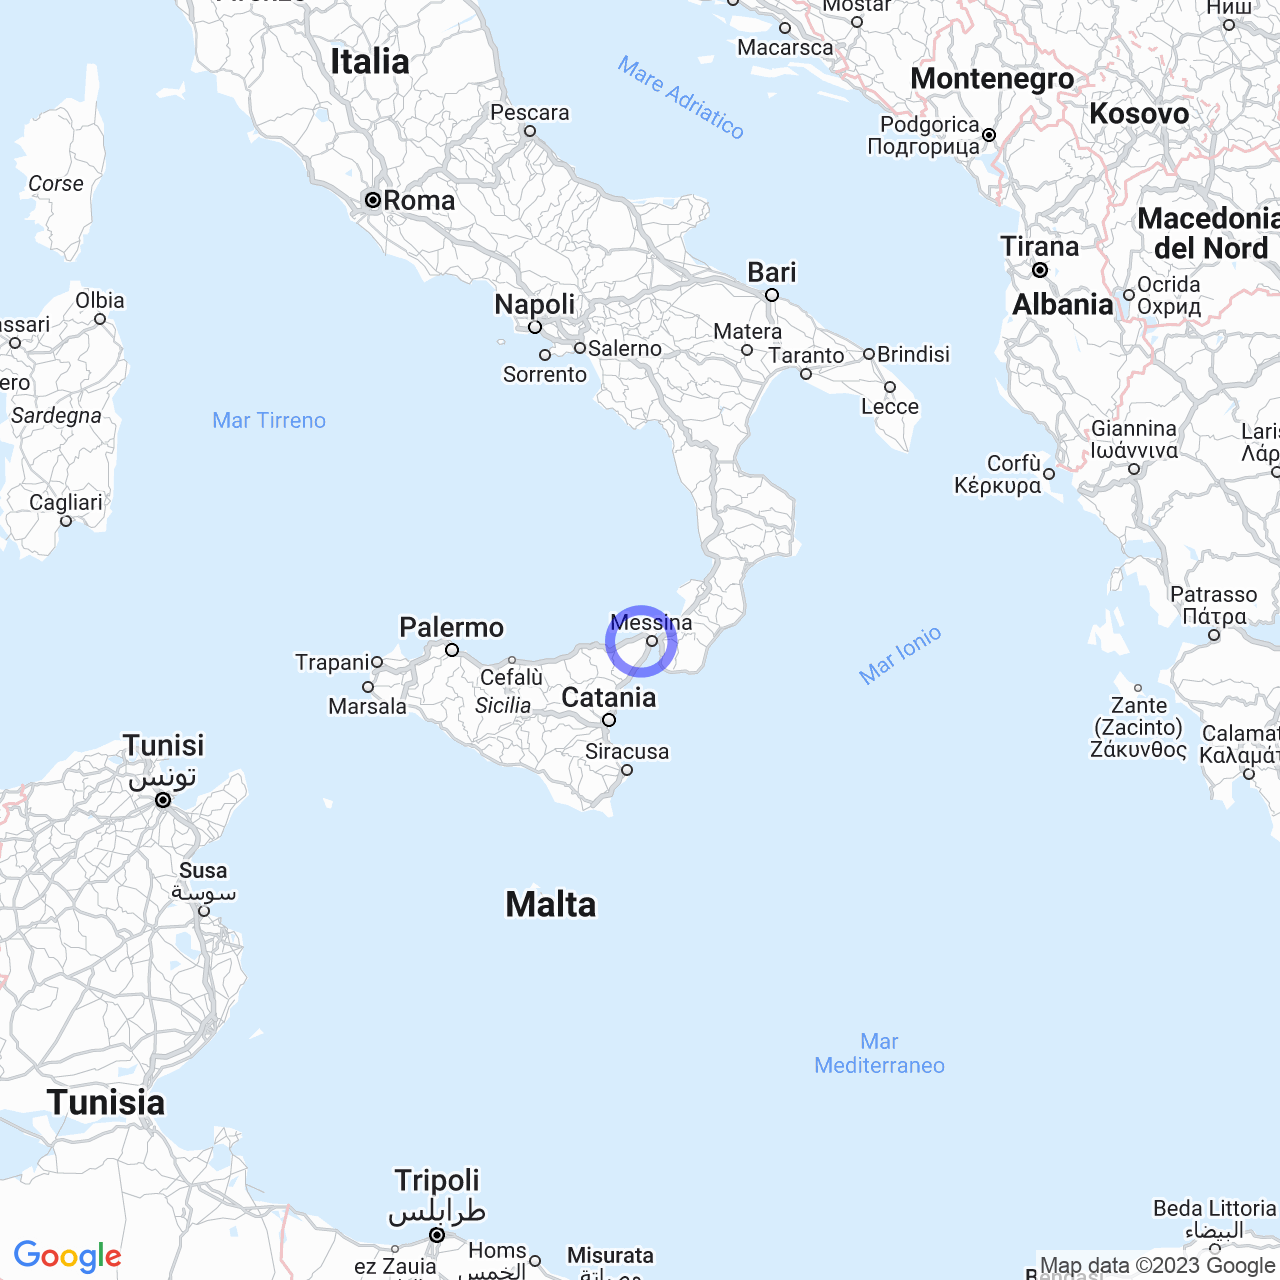 Saponara: history and culture of a Sicilian municipality